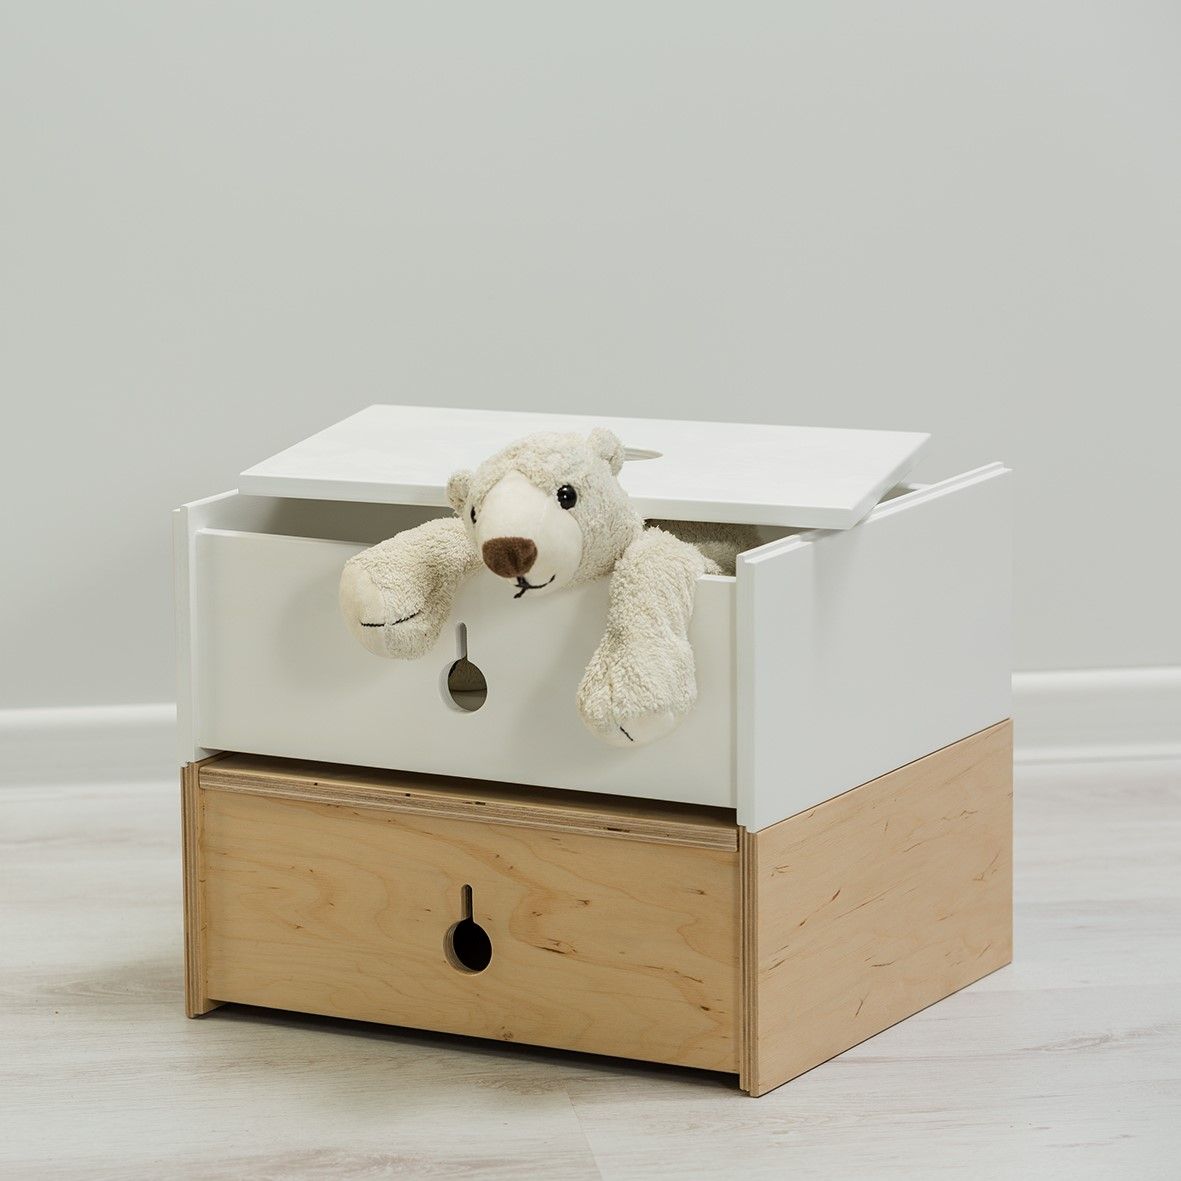 Wooden box - practical, stackable, multifunctional